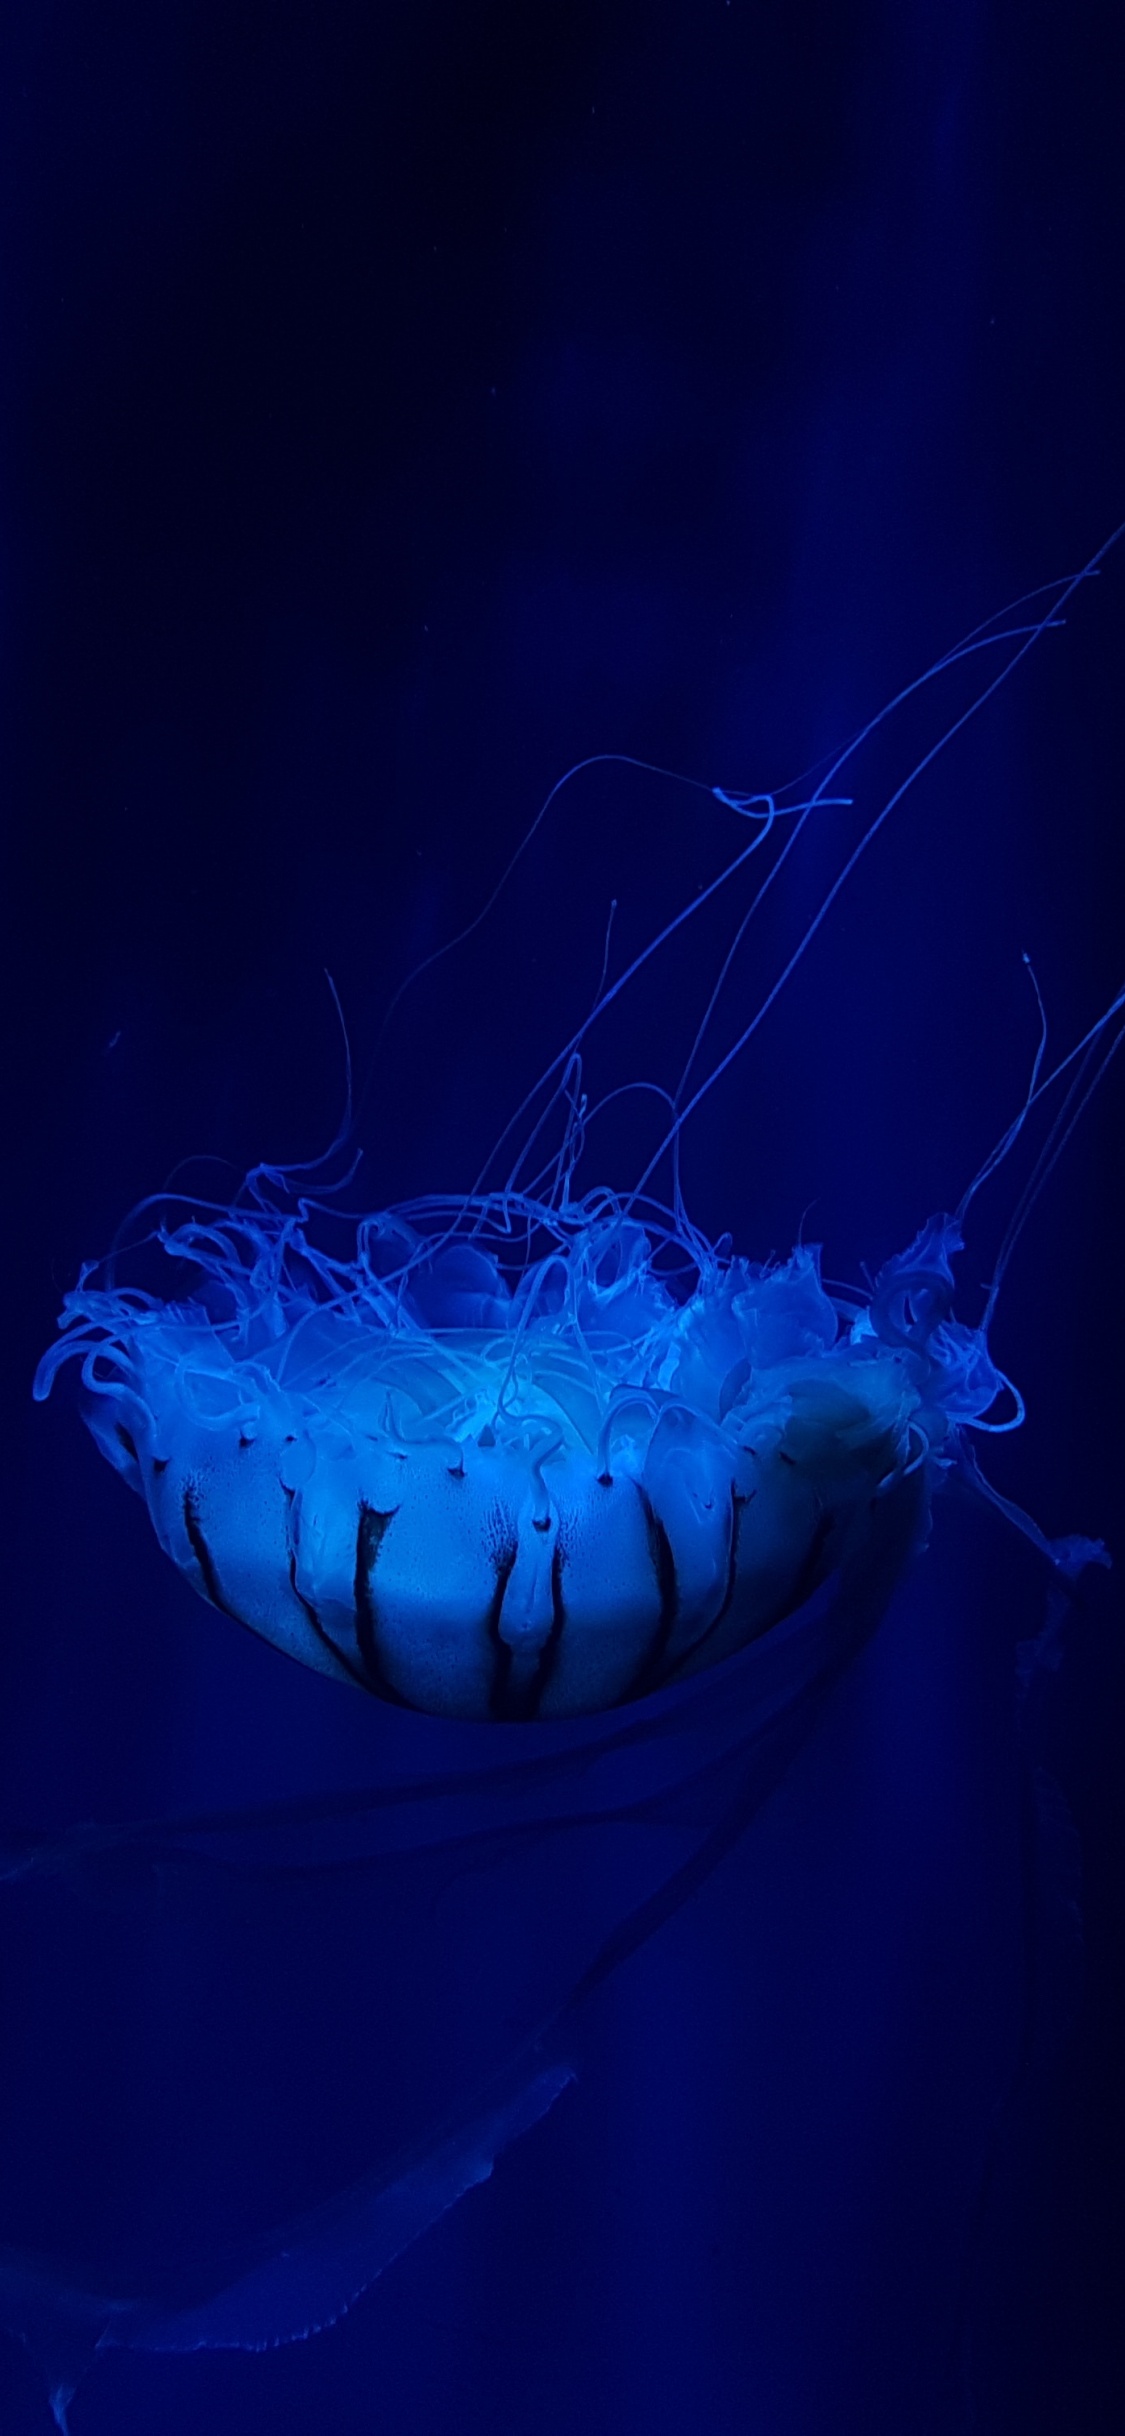 Blue Jellyfish in Blue Water. Wallpaper in 1125x2436 Resolution